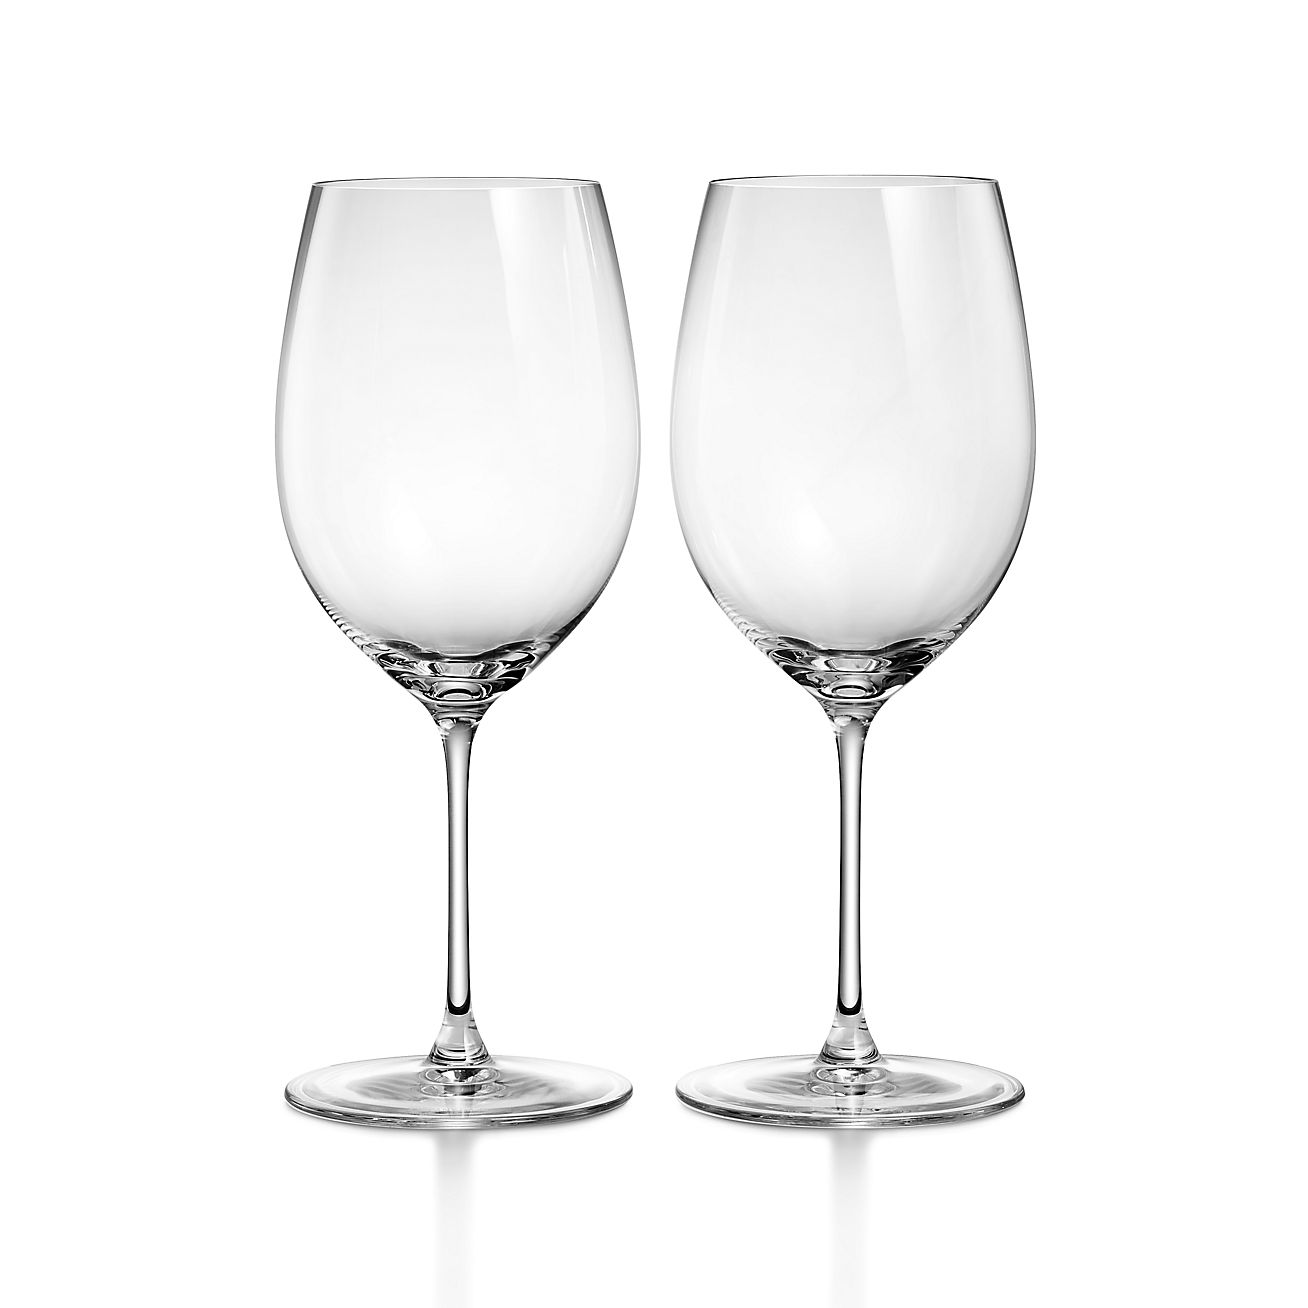 https://media.tiffany.com/is/image/Tiffany/EcomItemL2/tiffany-home-essentialsred-wine-glasses-73480361_1062585_ED.jpg